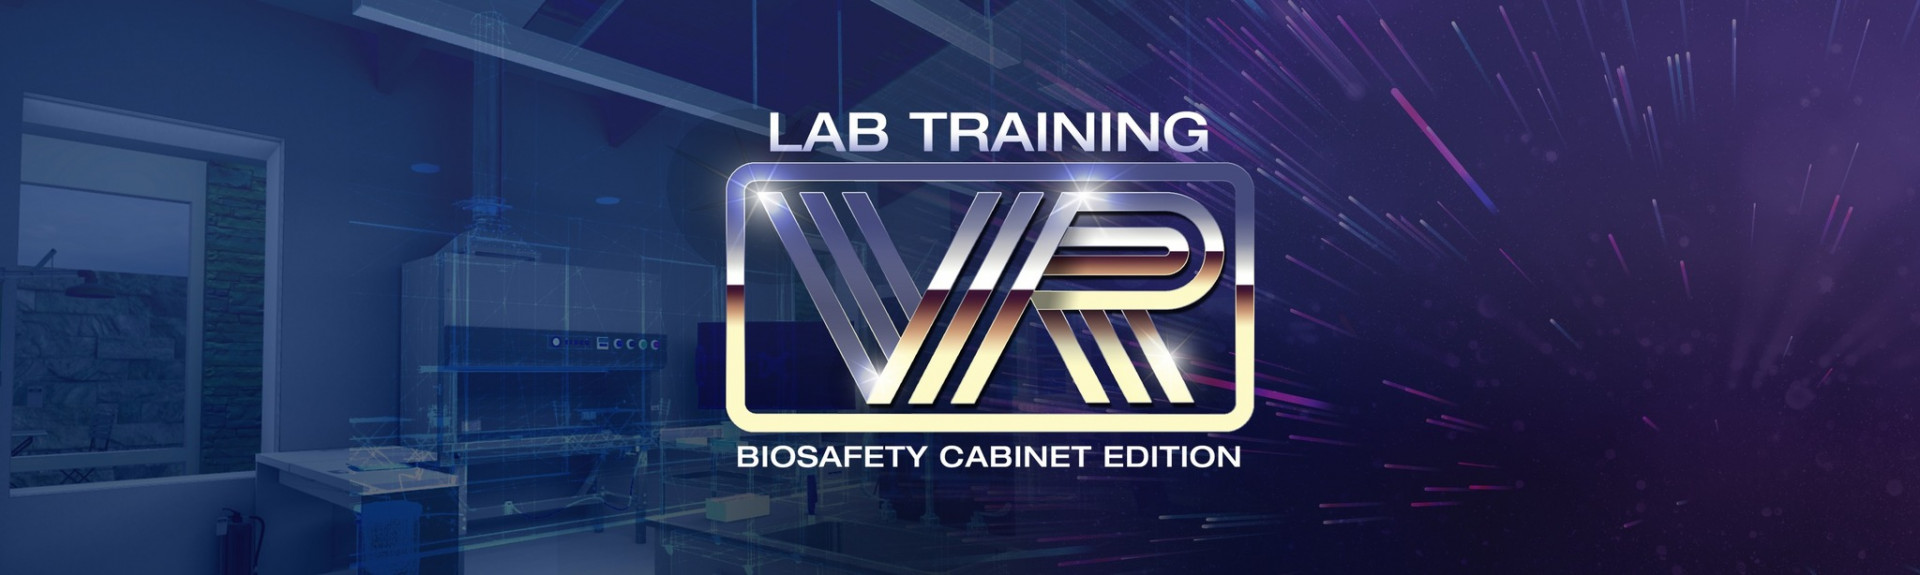 LabTrainingVR: Biosafety Cabinet Edition